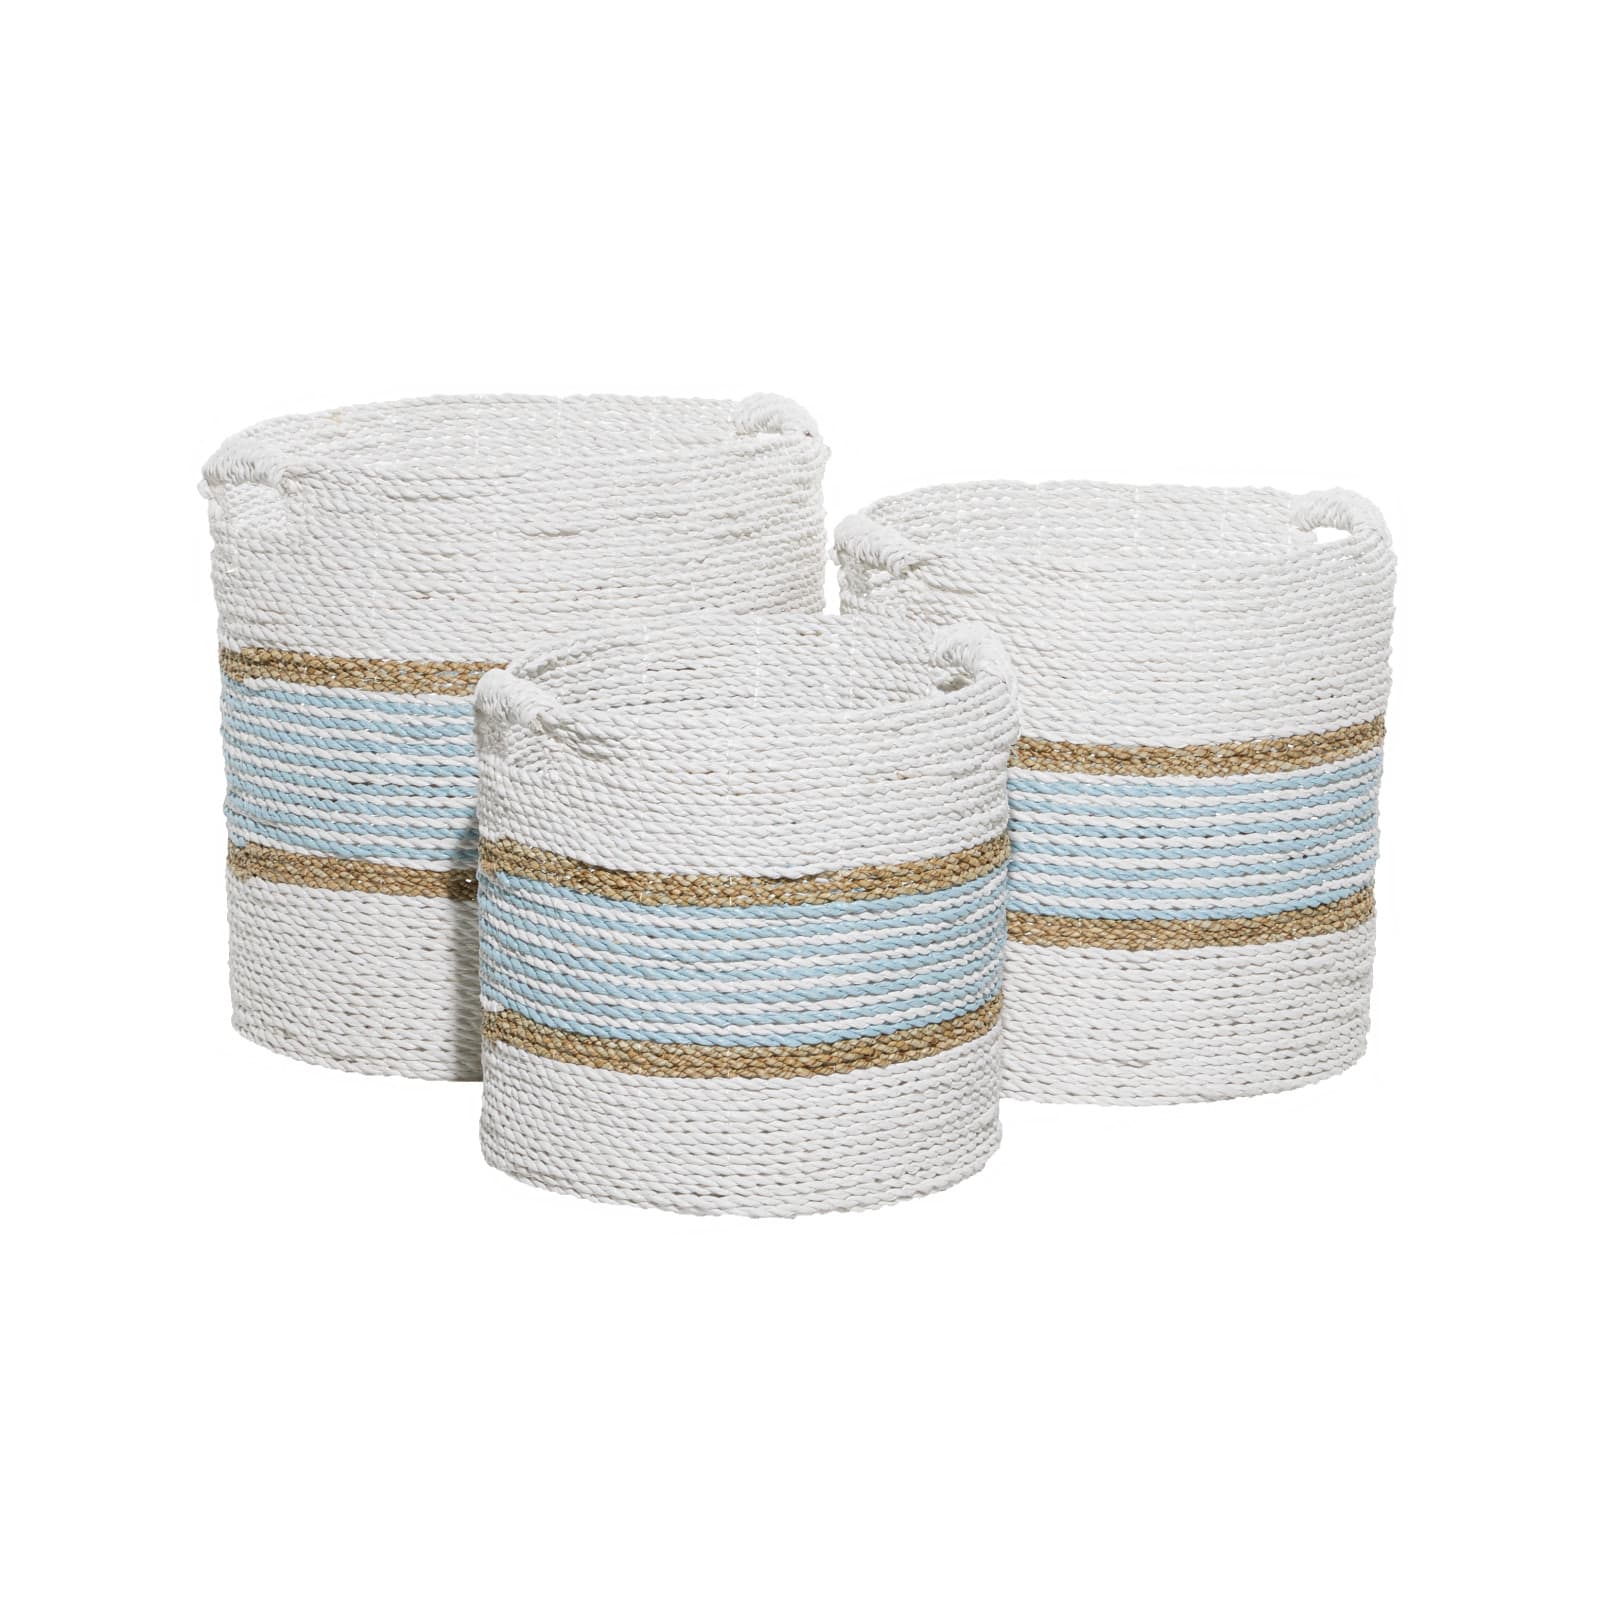 White & Light Blue Natural Seagrass Coastal Storage Basket Set